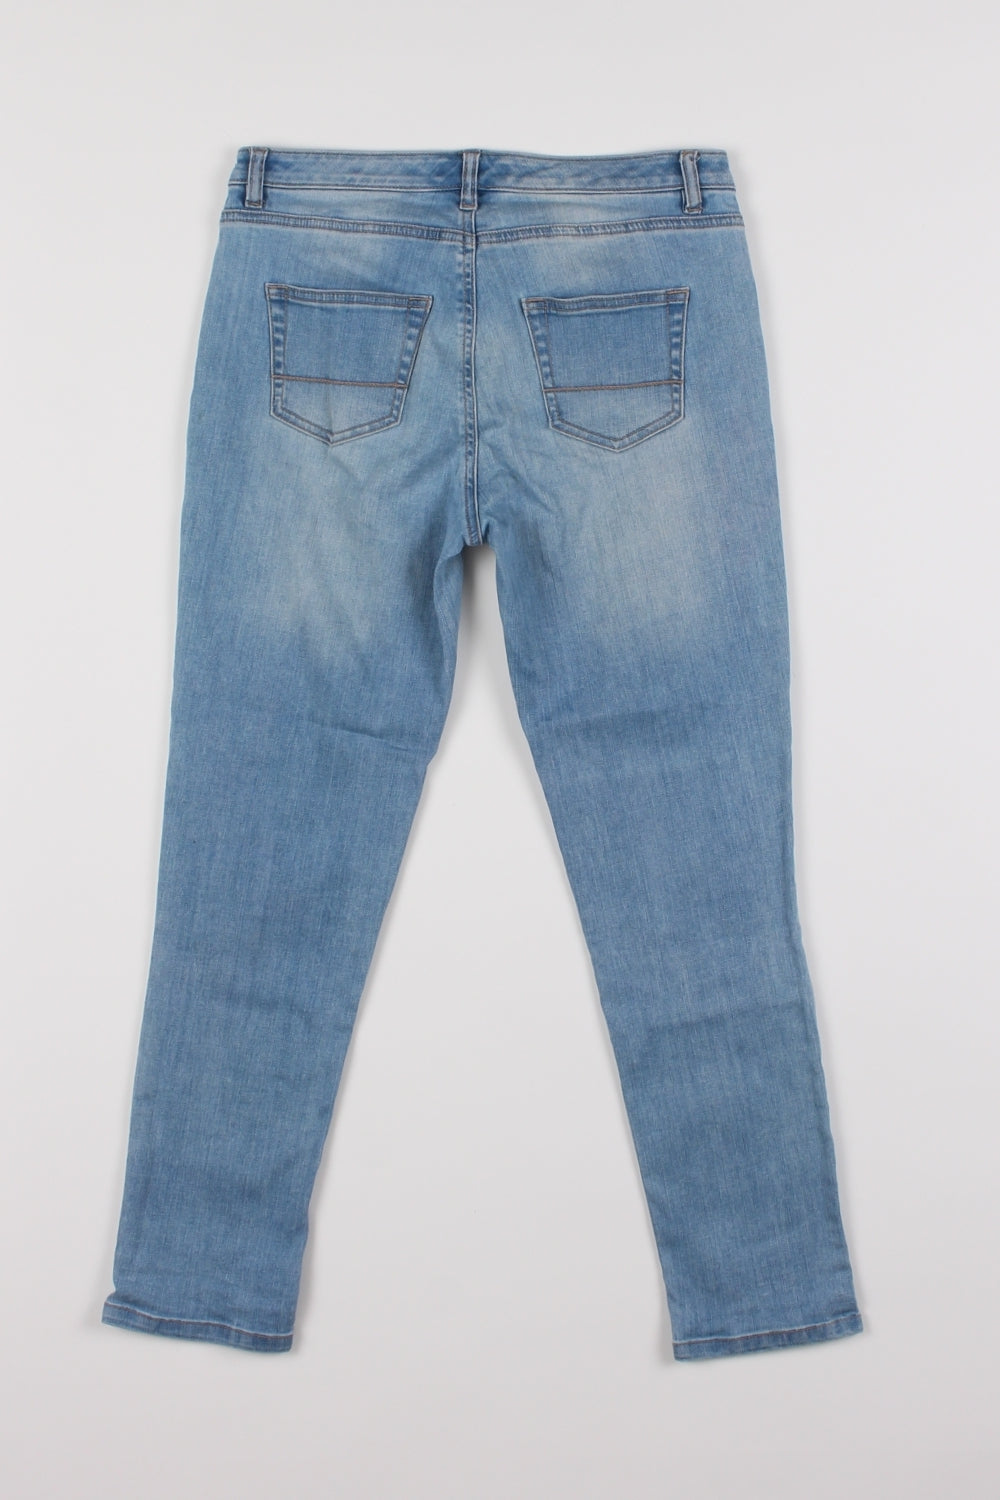 Trenery Blue Skinny Jeans AU 6